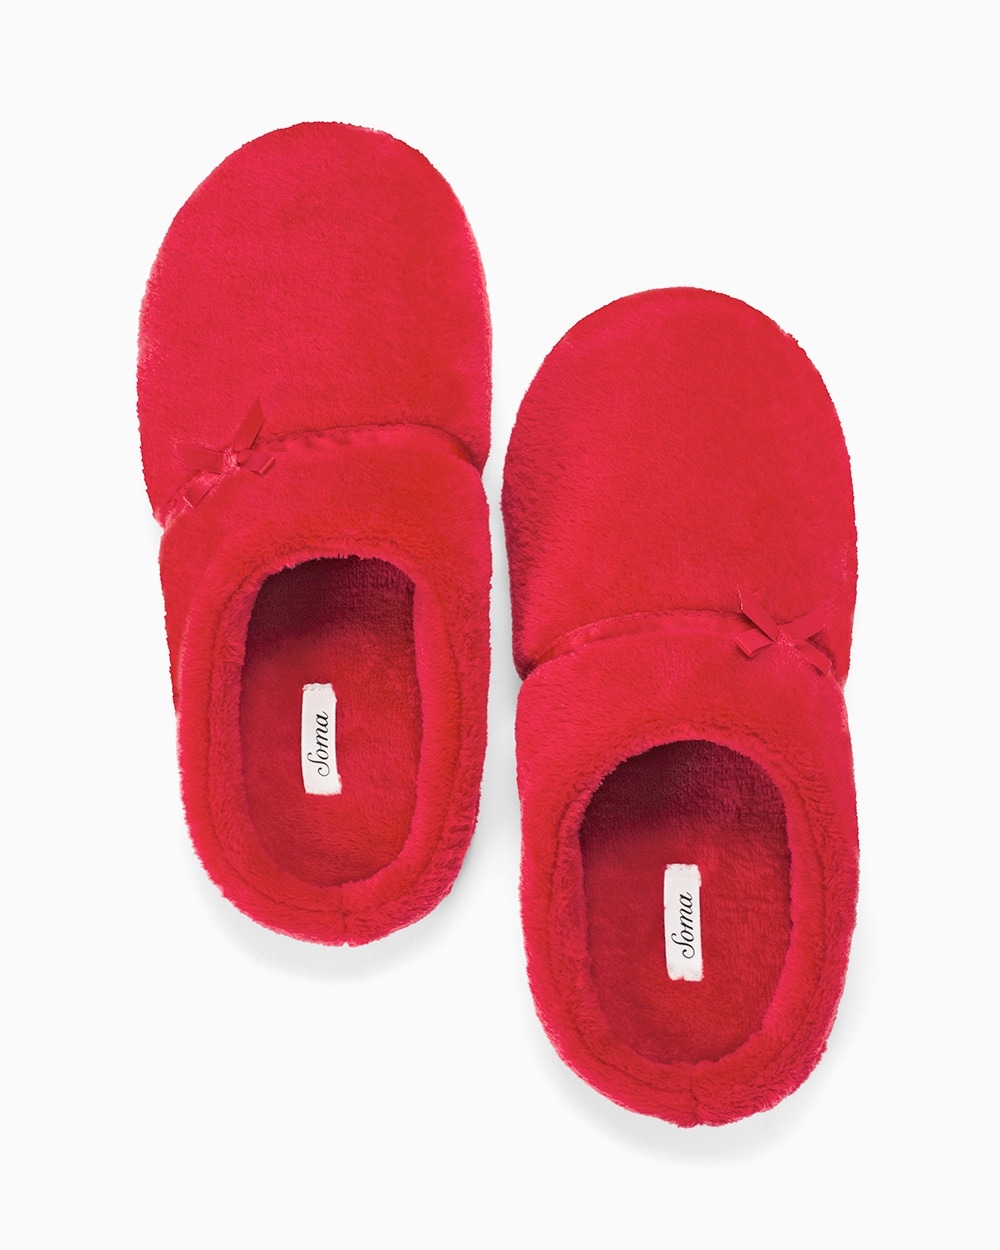 Plush Slippers Festive Red